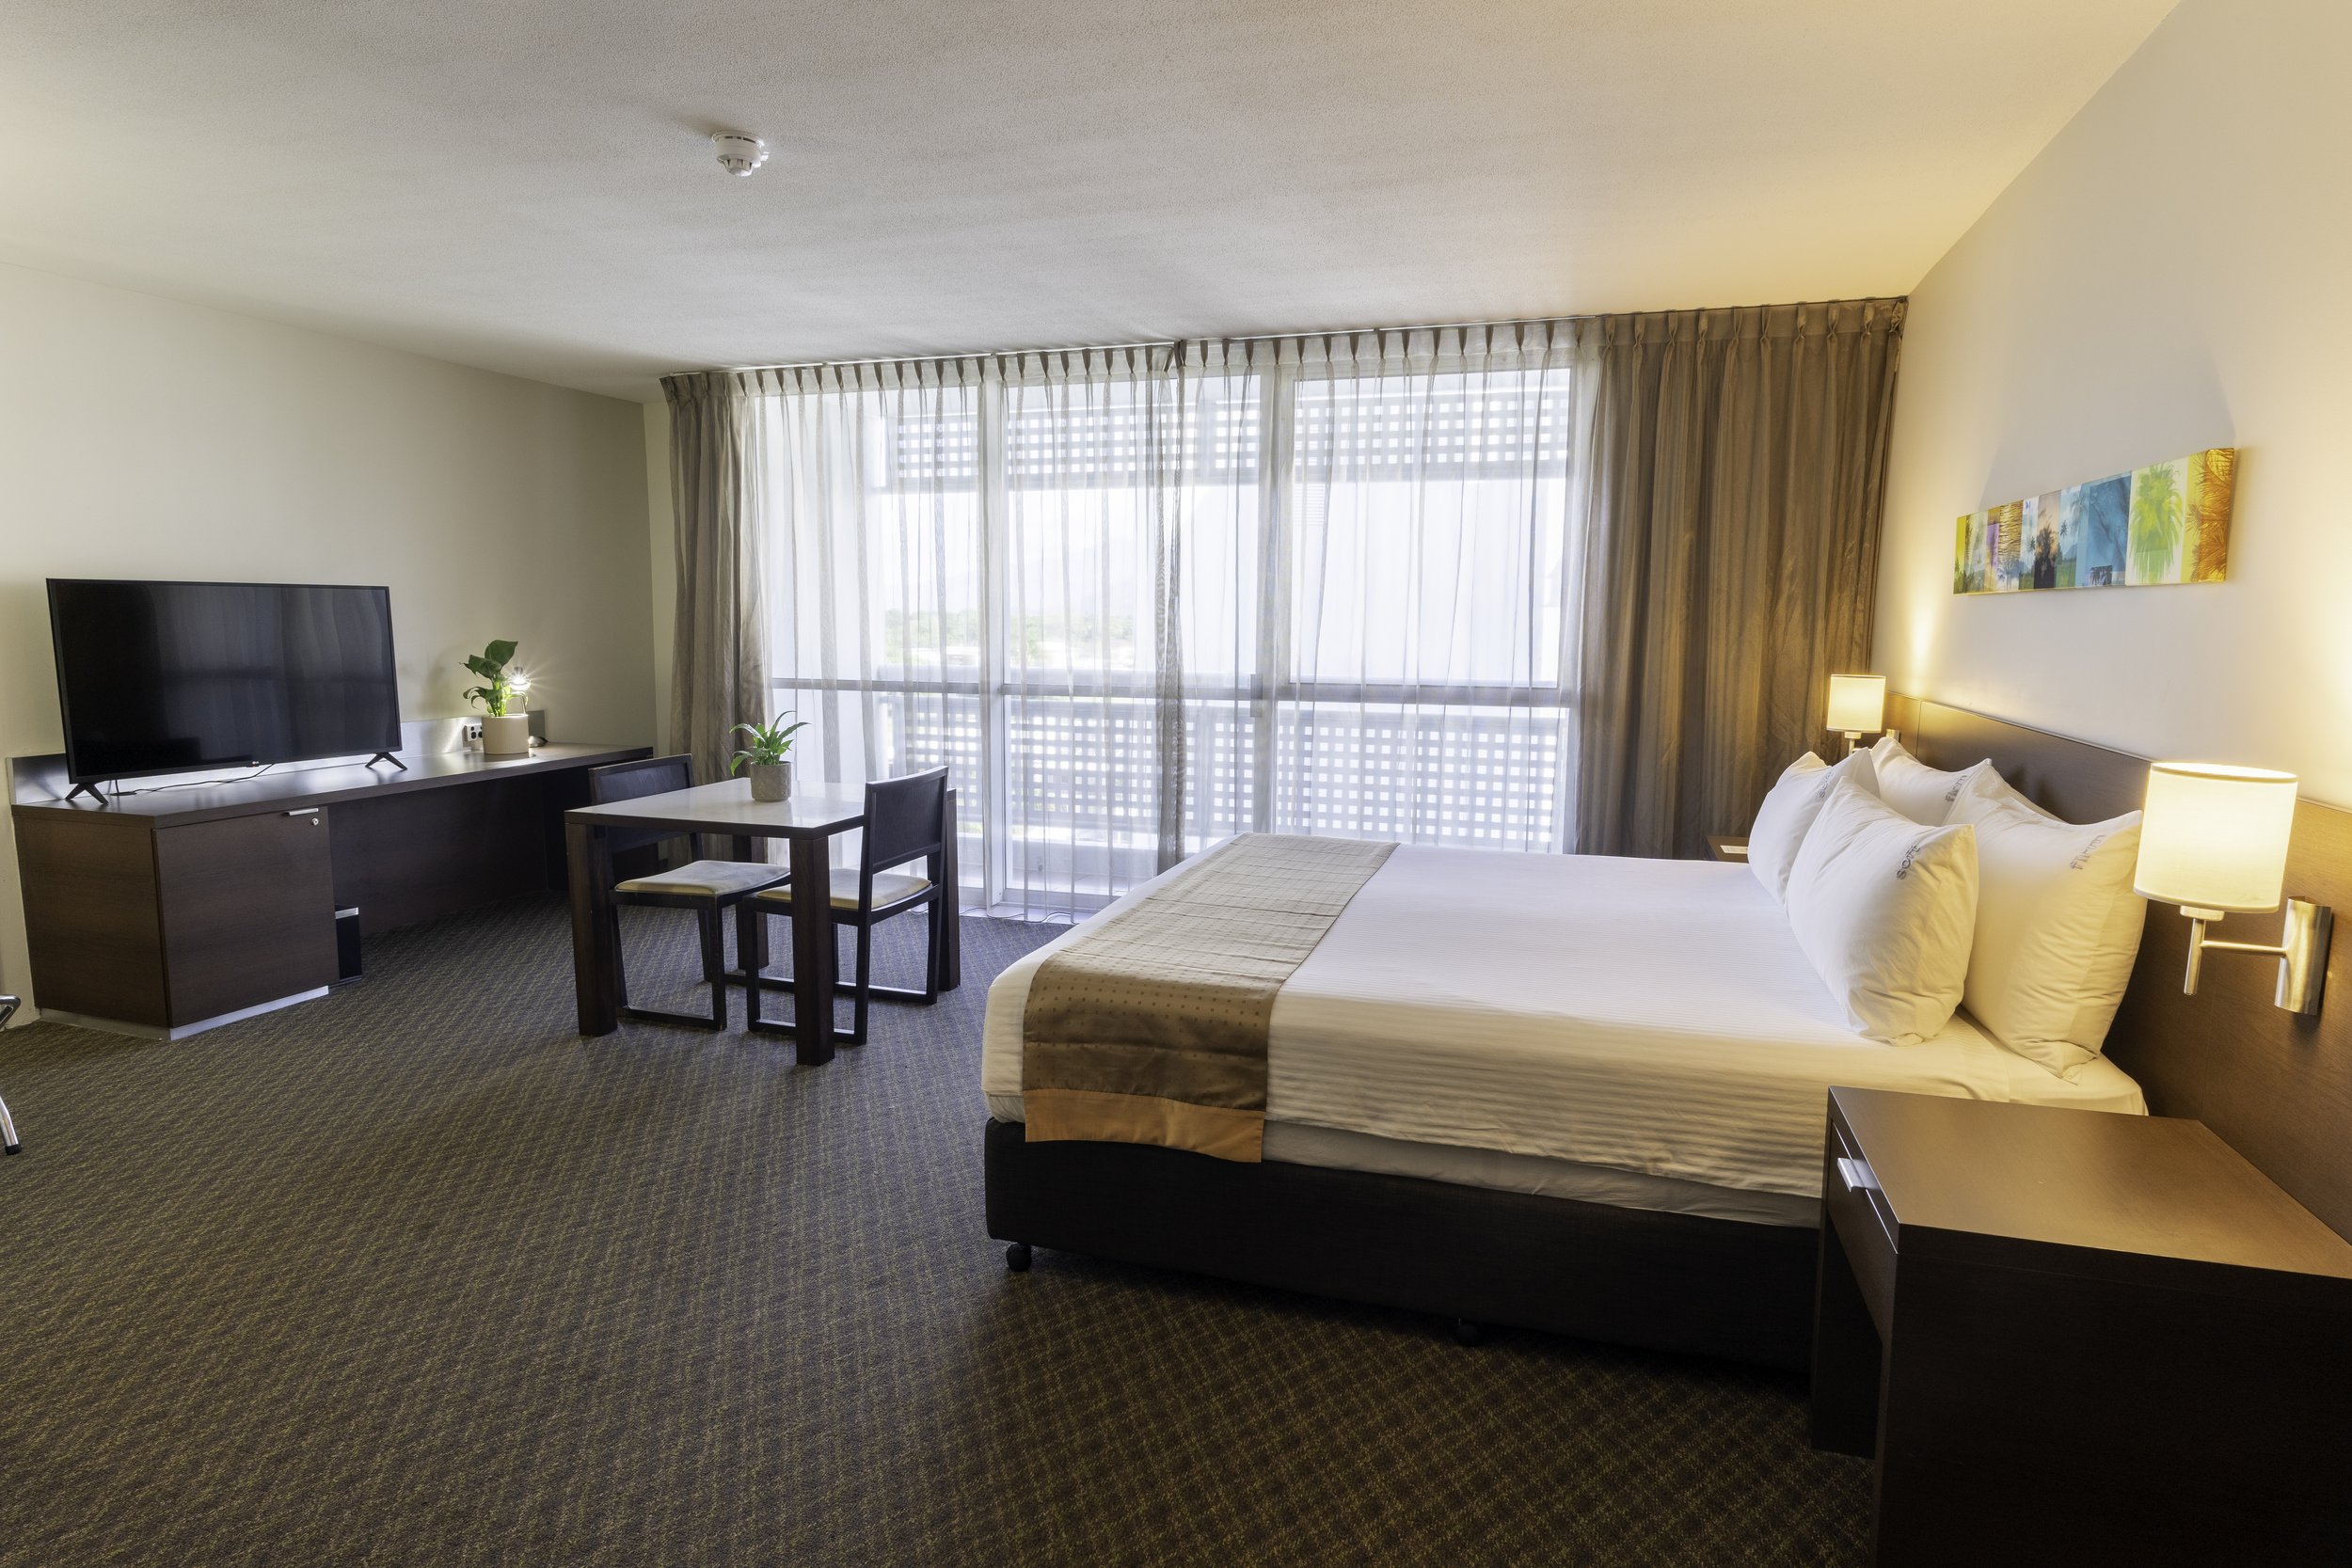 HOL- Hotel Rooms - 080623-26.jpg